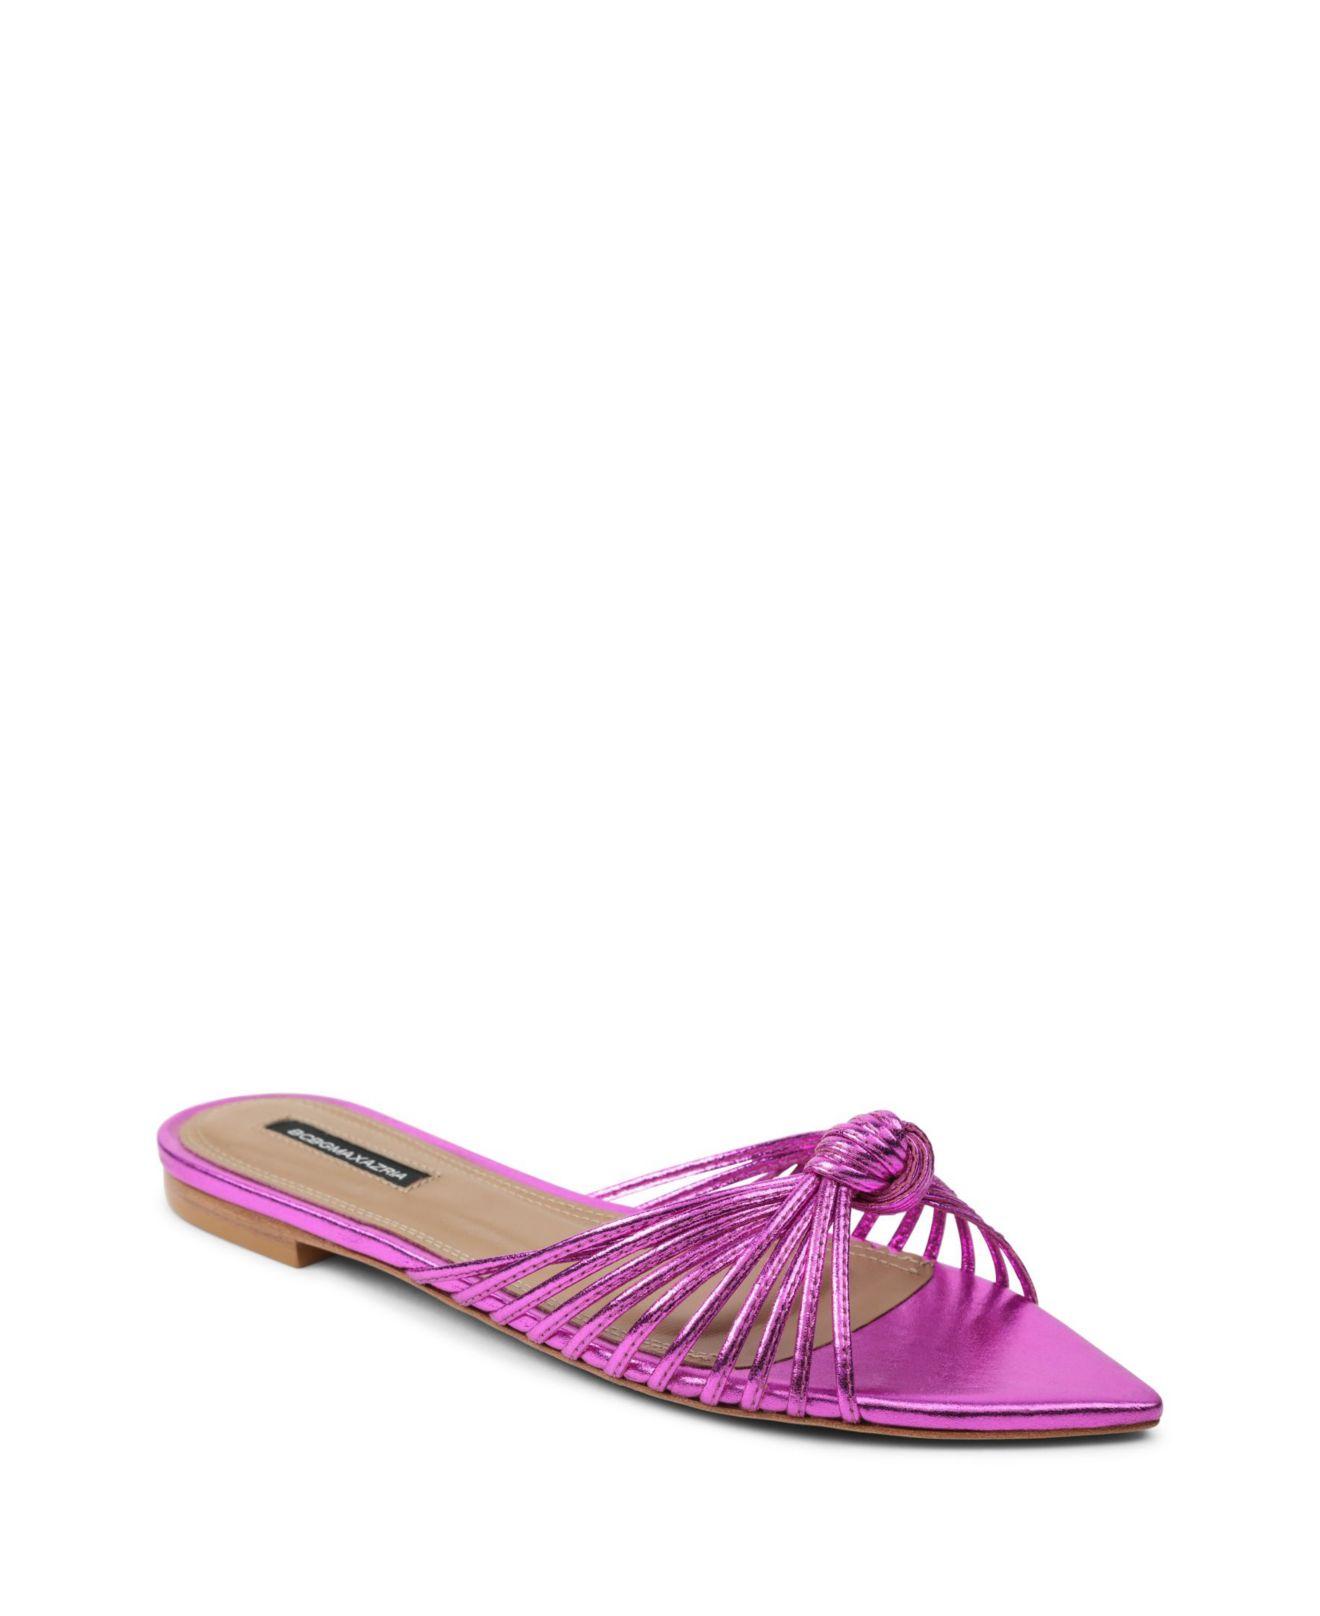 BONOVA size 5 Pink Metallic Sandals New Leather Footbed 